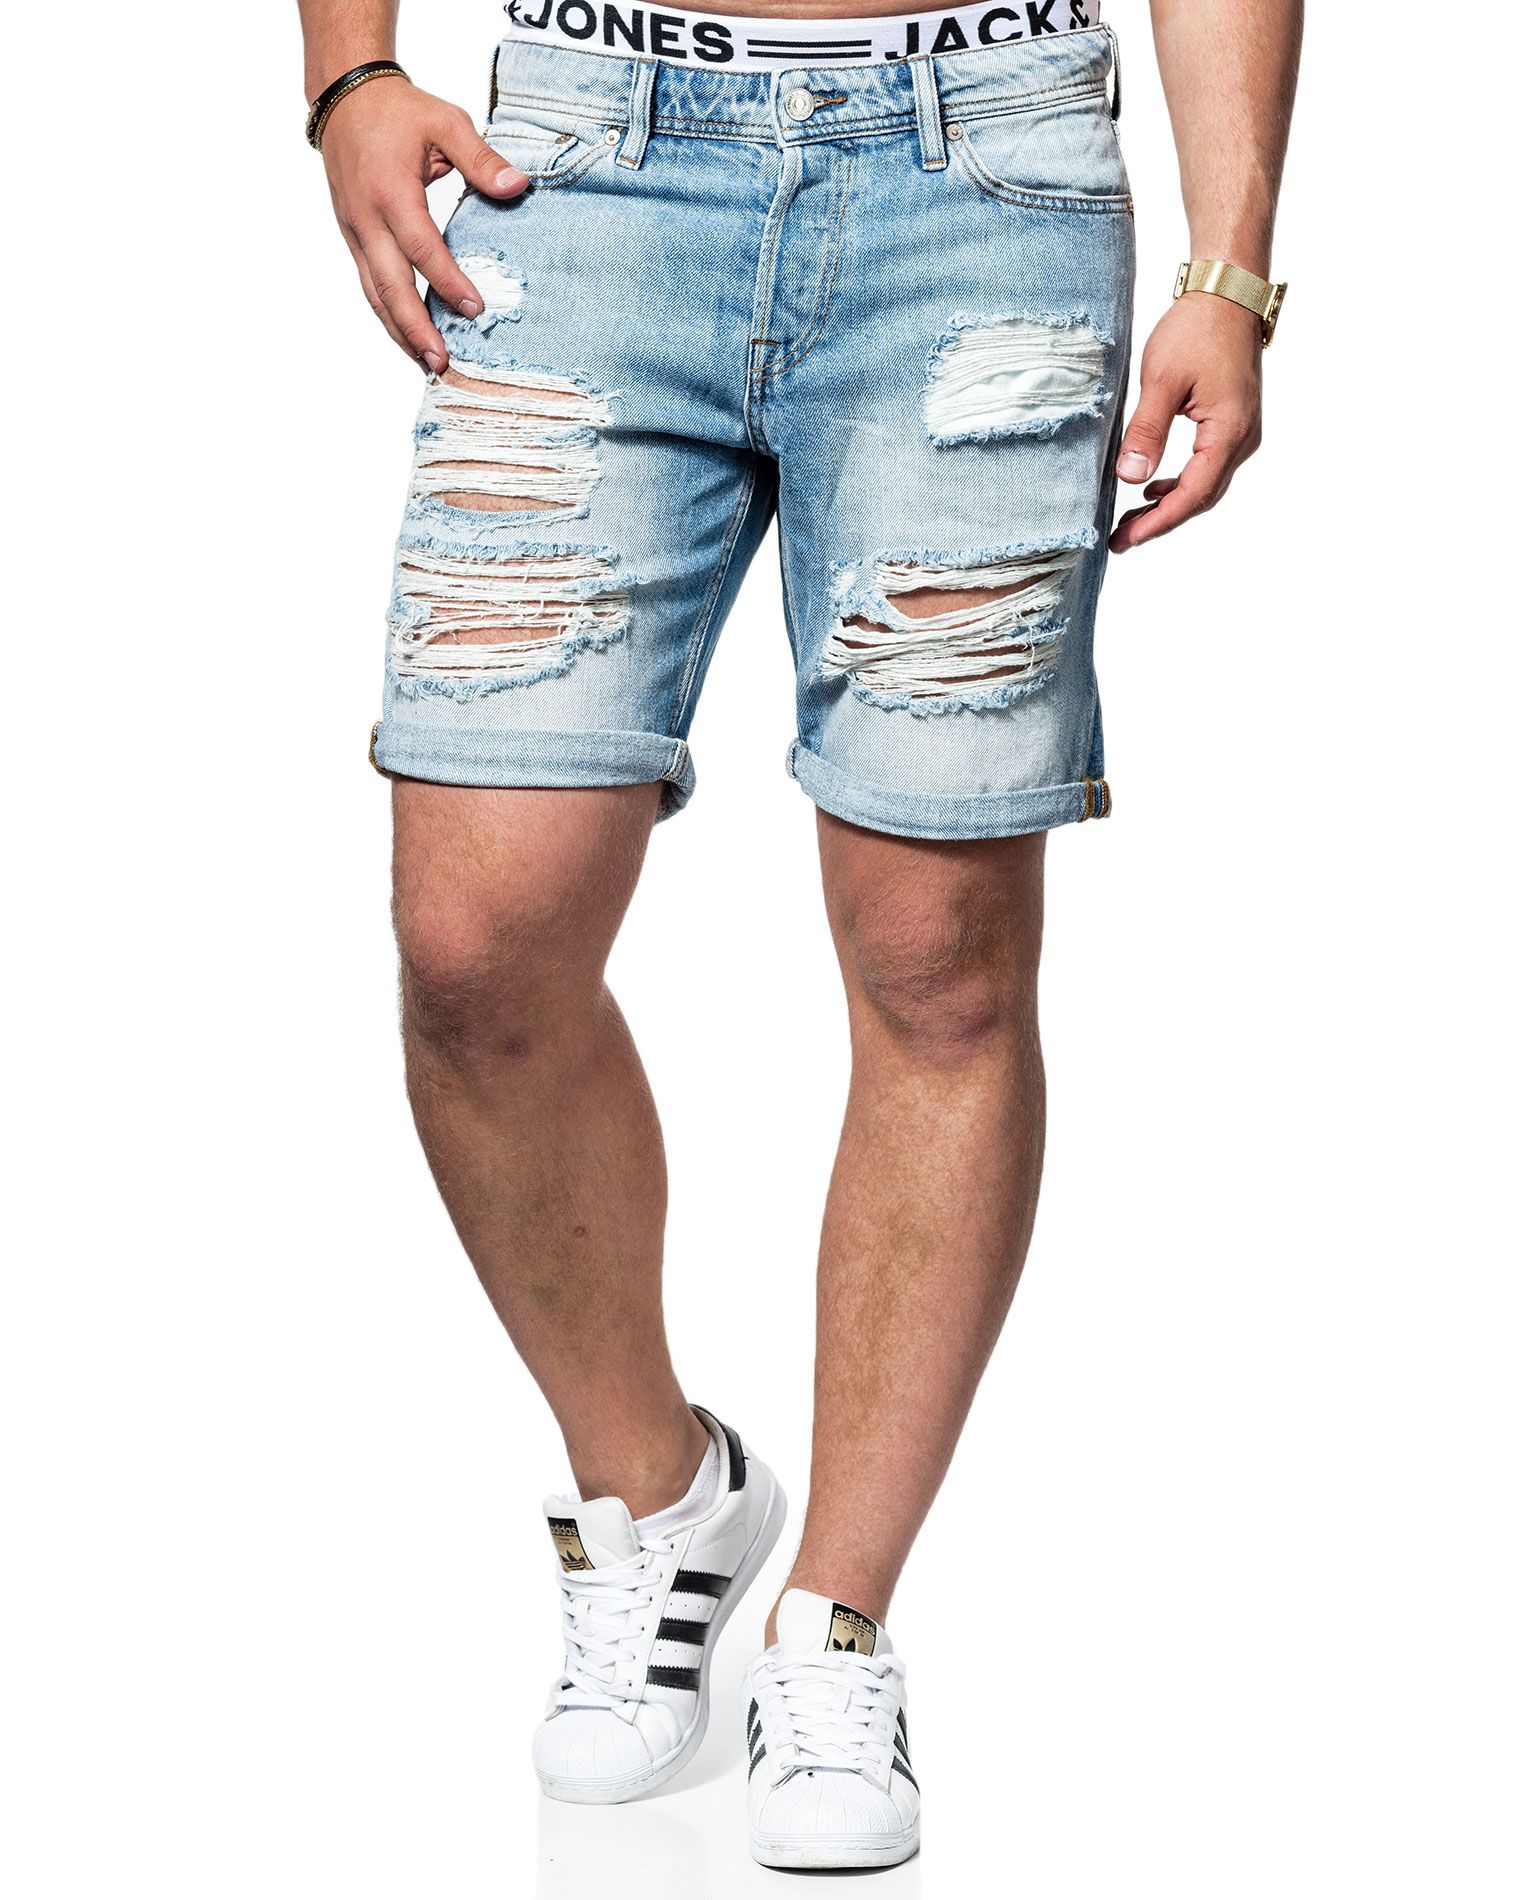 jack jones jean shorts